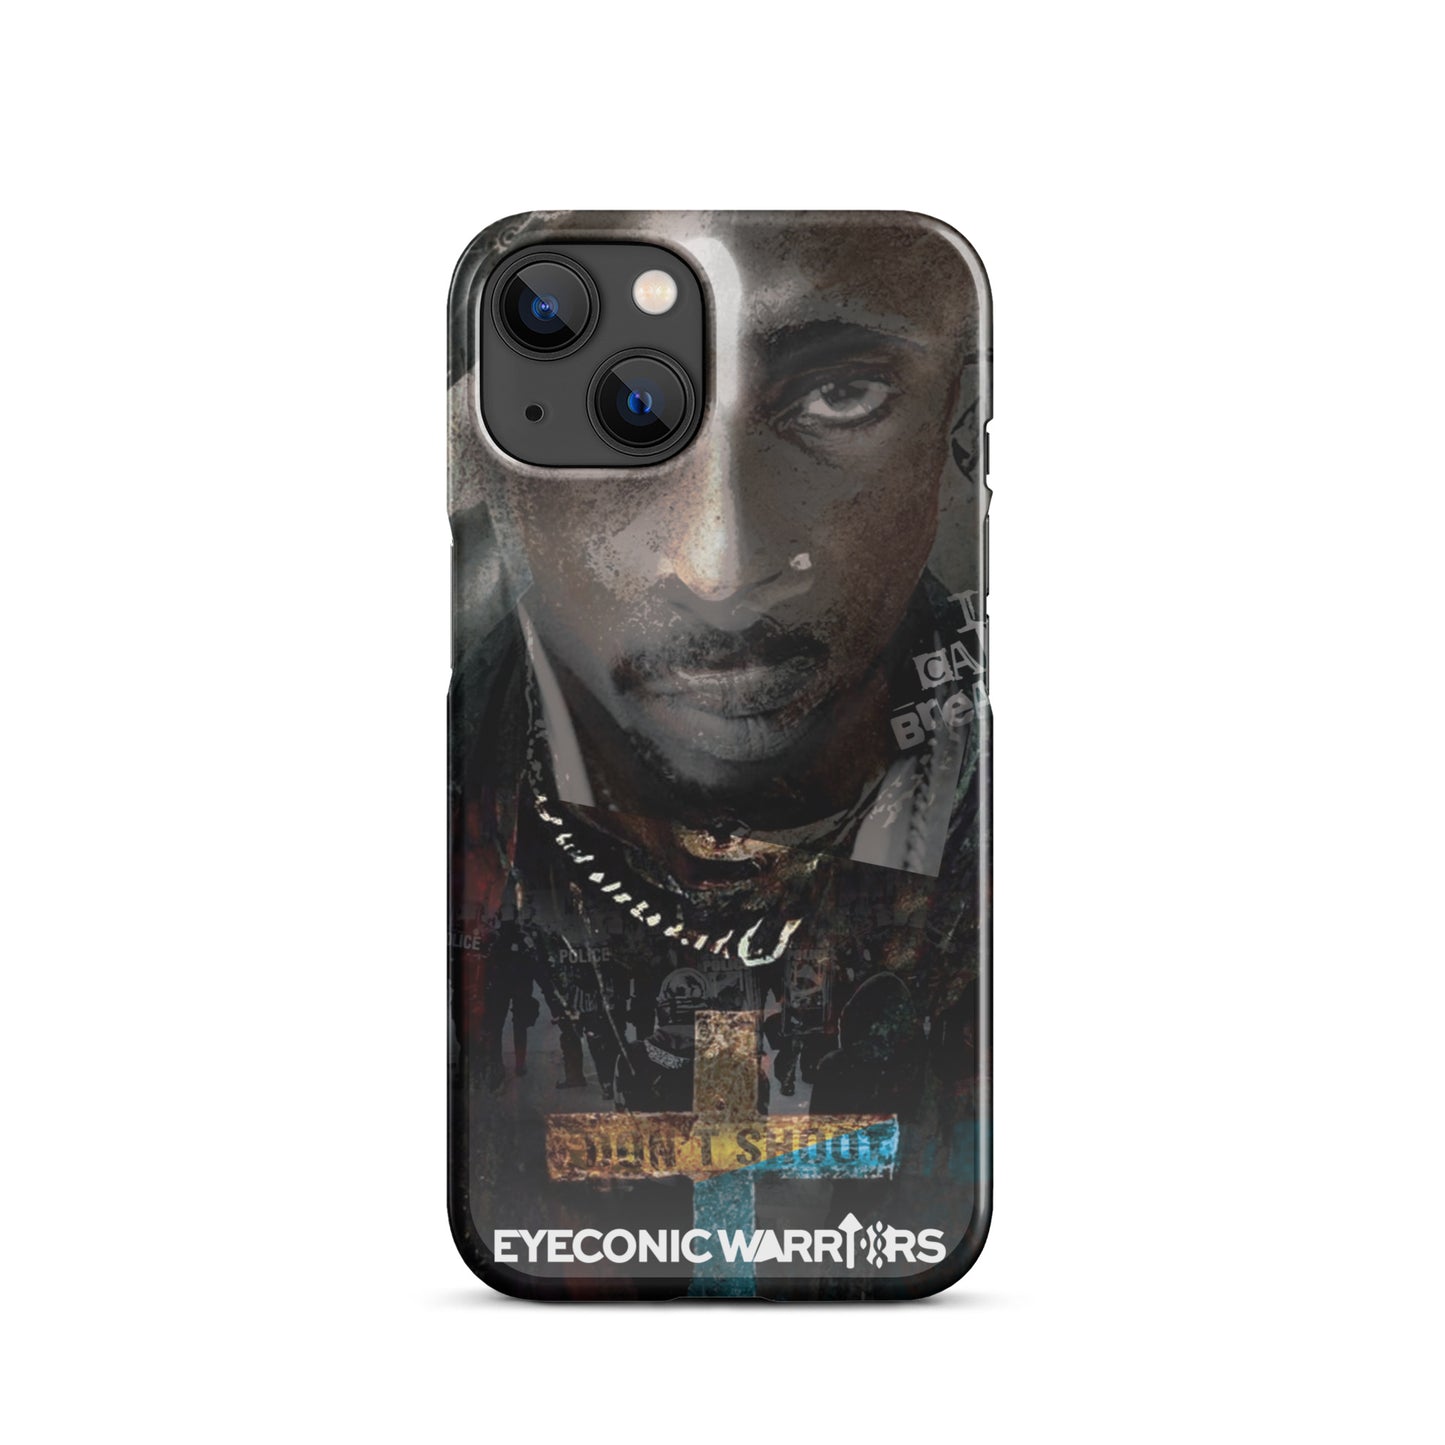 Tupac Shakur Legacy Custom iPhone Case - Art for Change